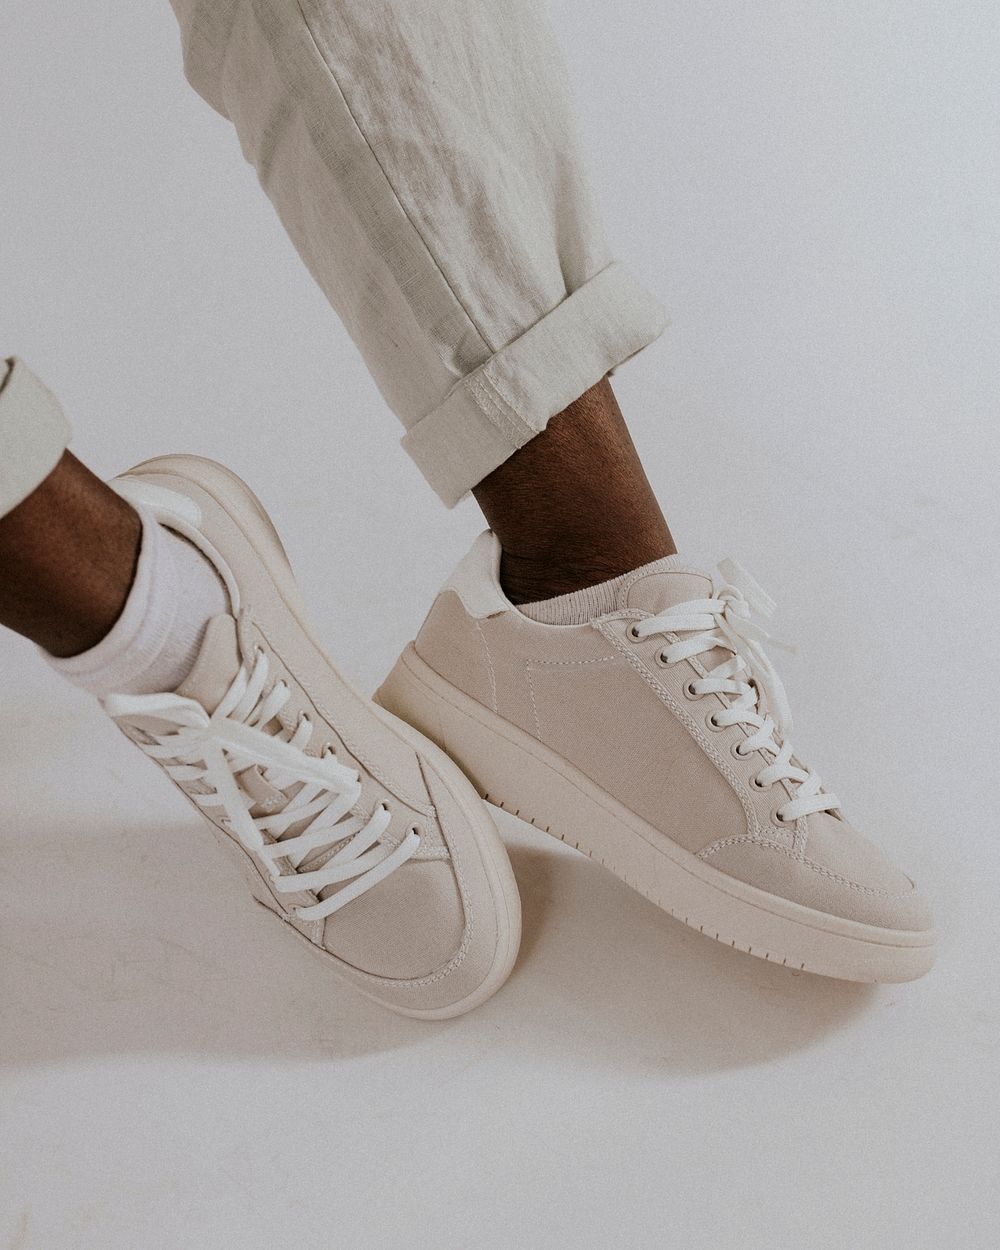 Gray canvas sneakers, minimal fashion